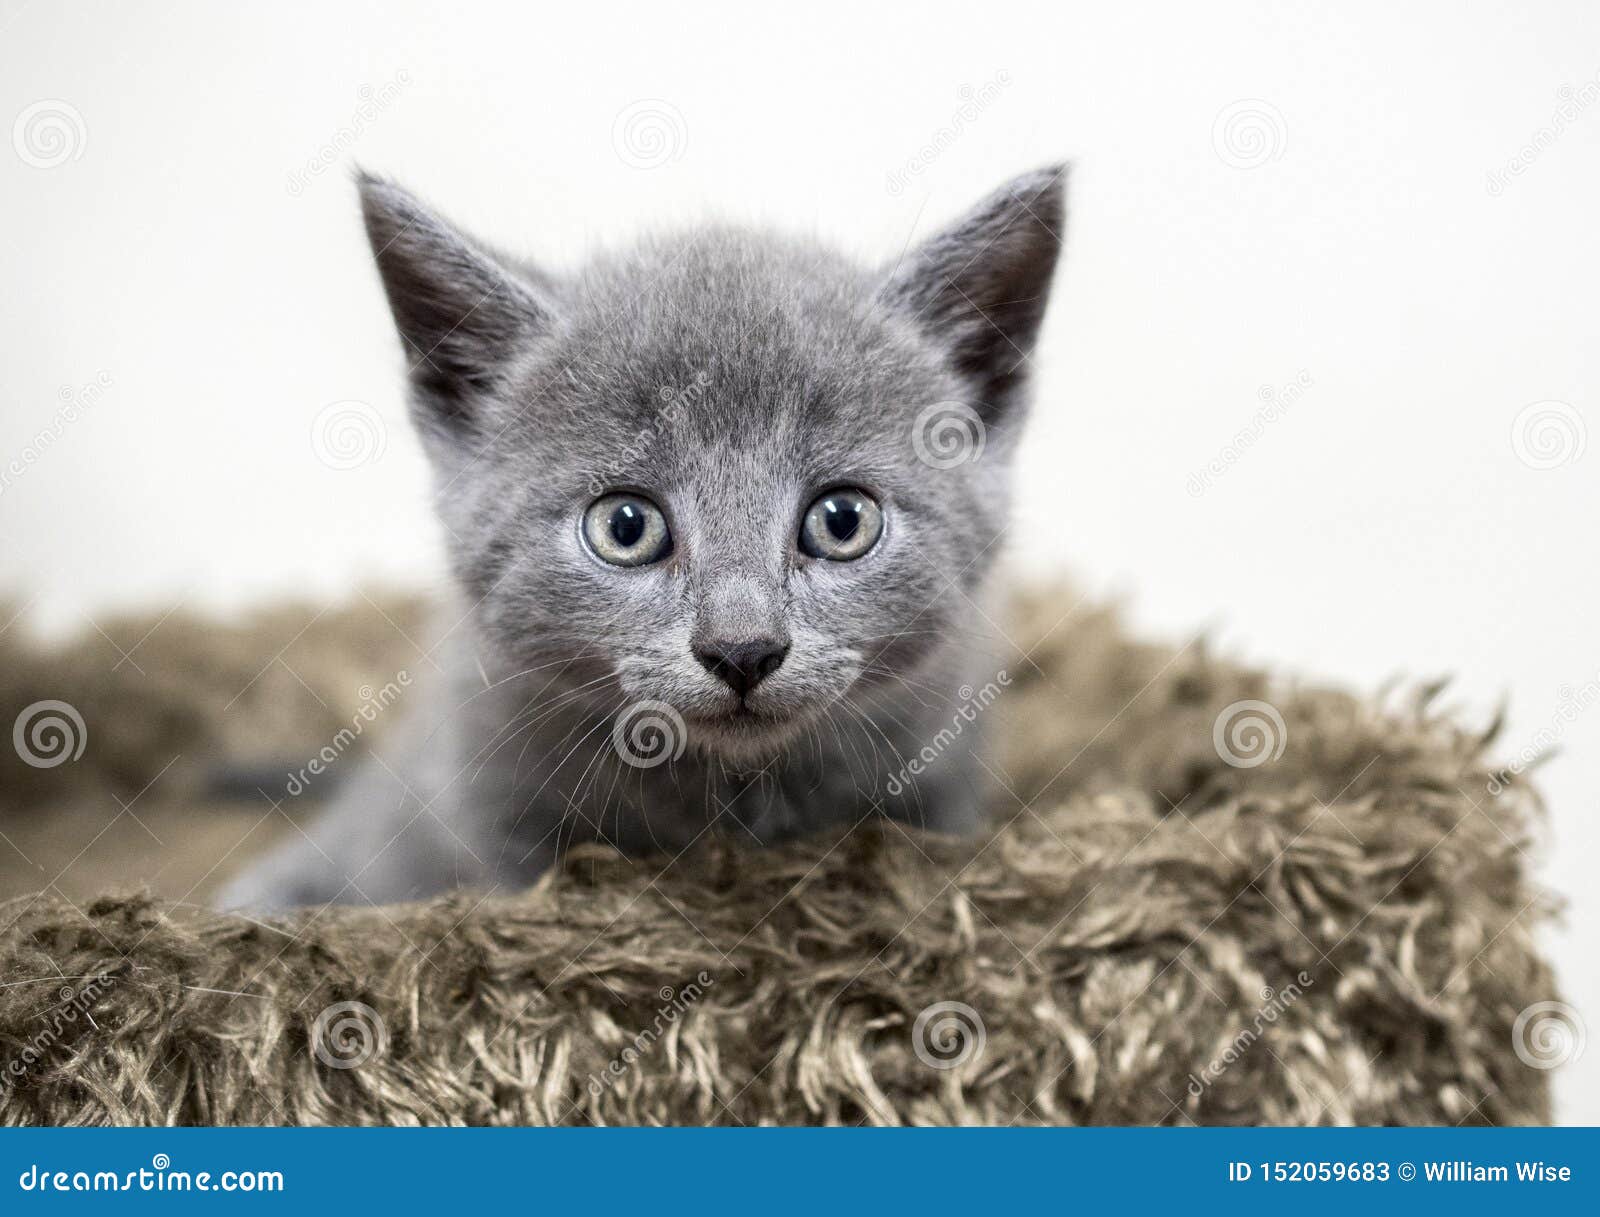 grey baby kitten